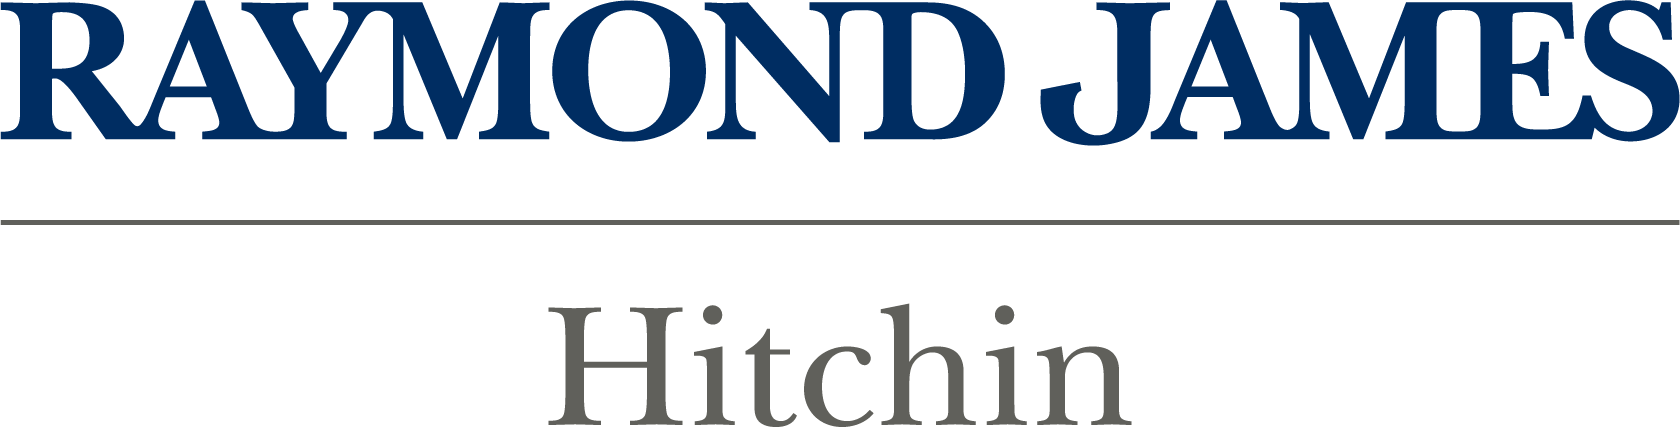 Raymond James Hitchin Logo